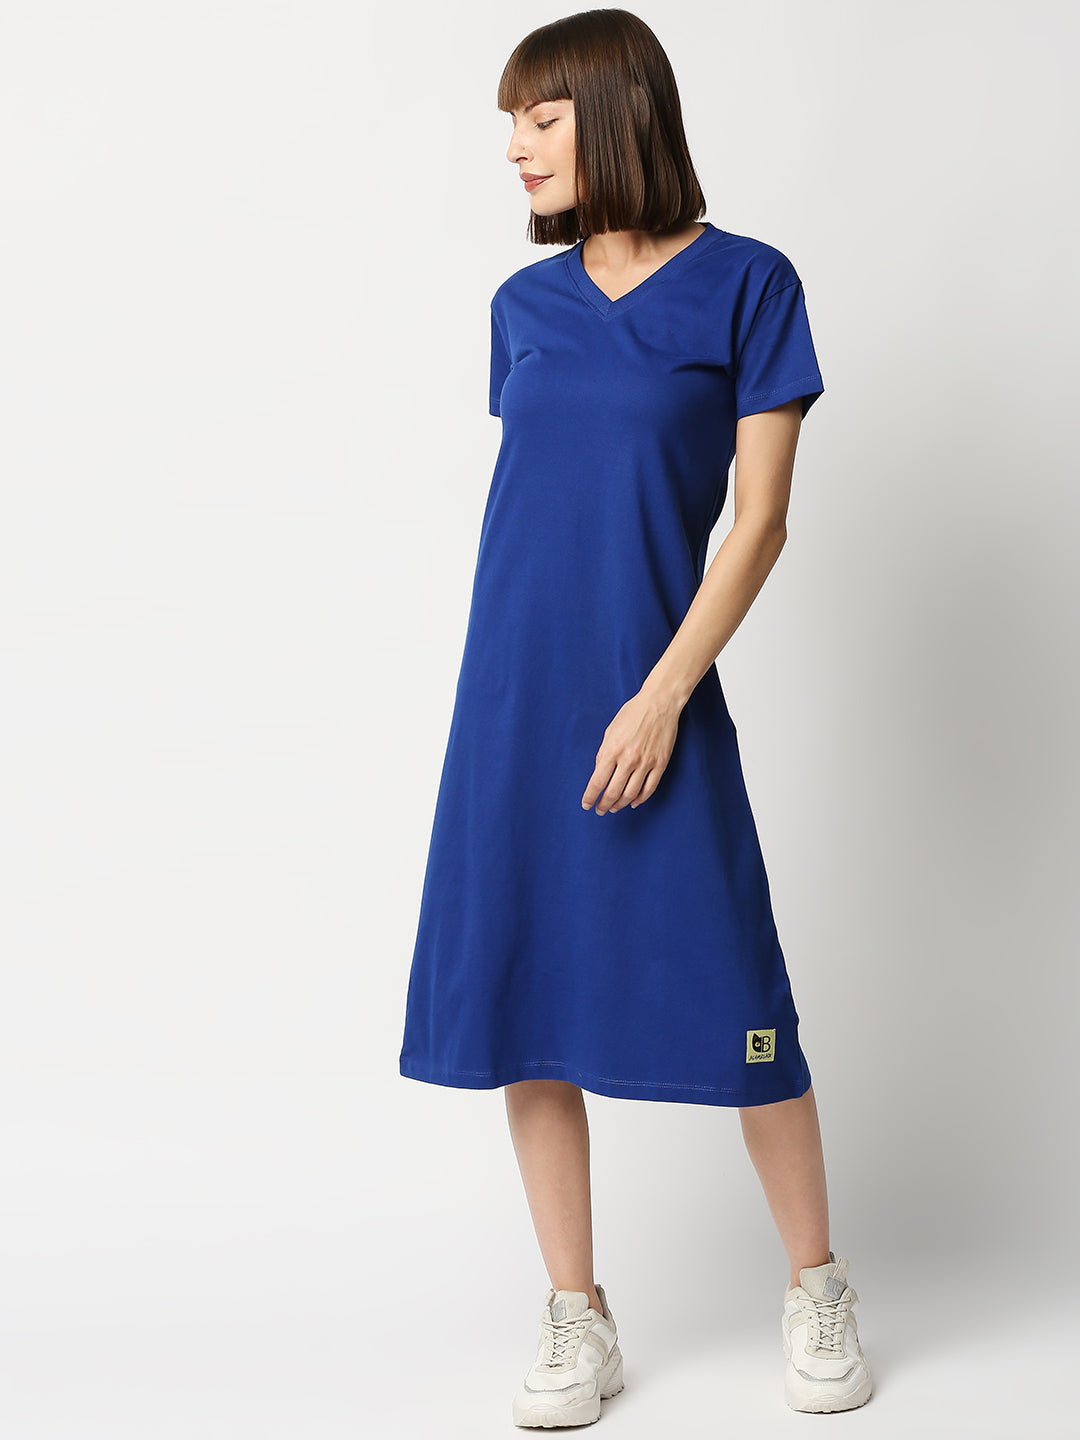 Buy BLAMBLACK Women Round neck Royal Blue Solid Half sleeves Dresses